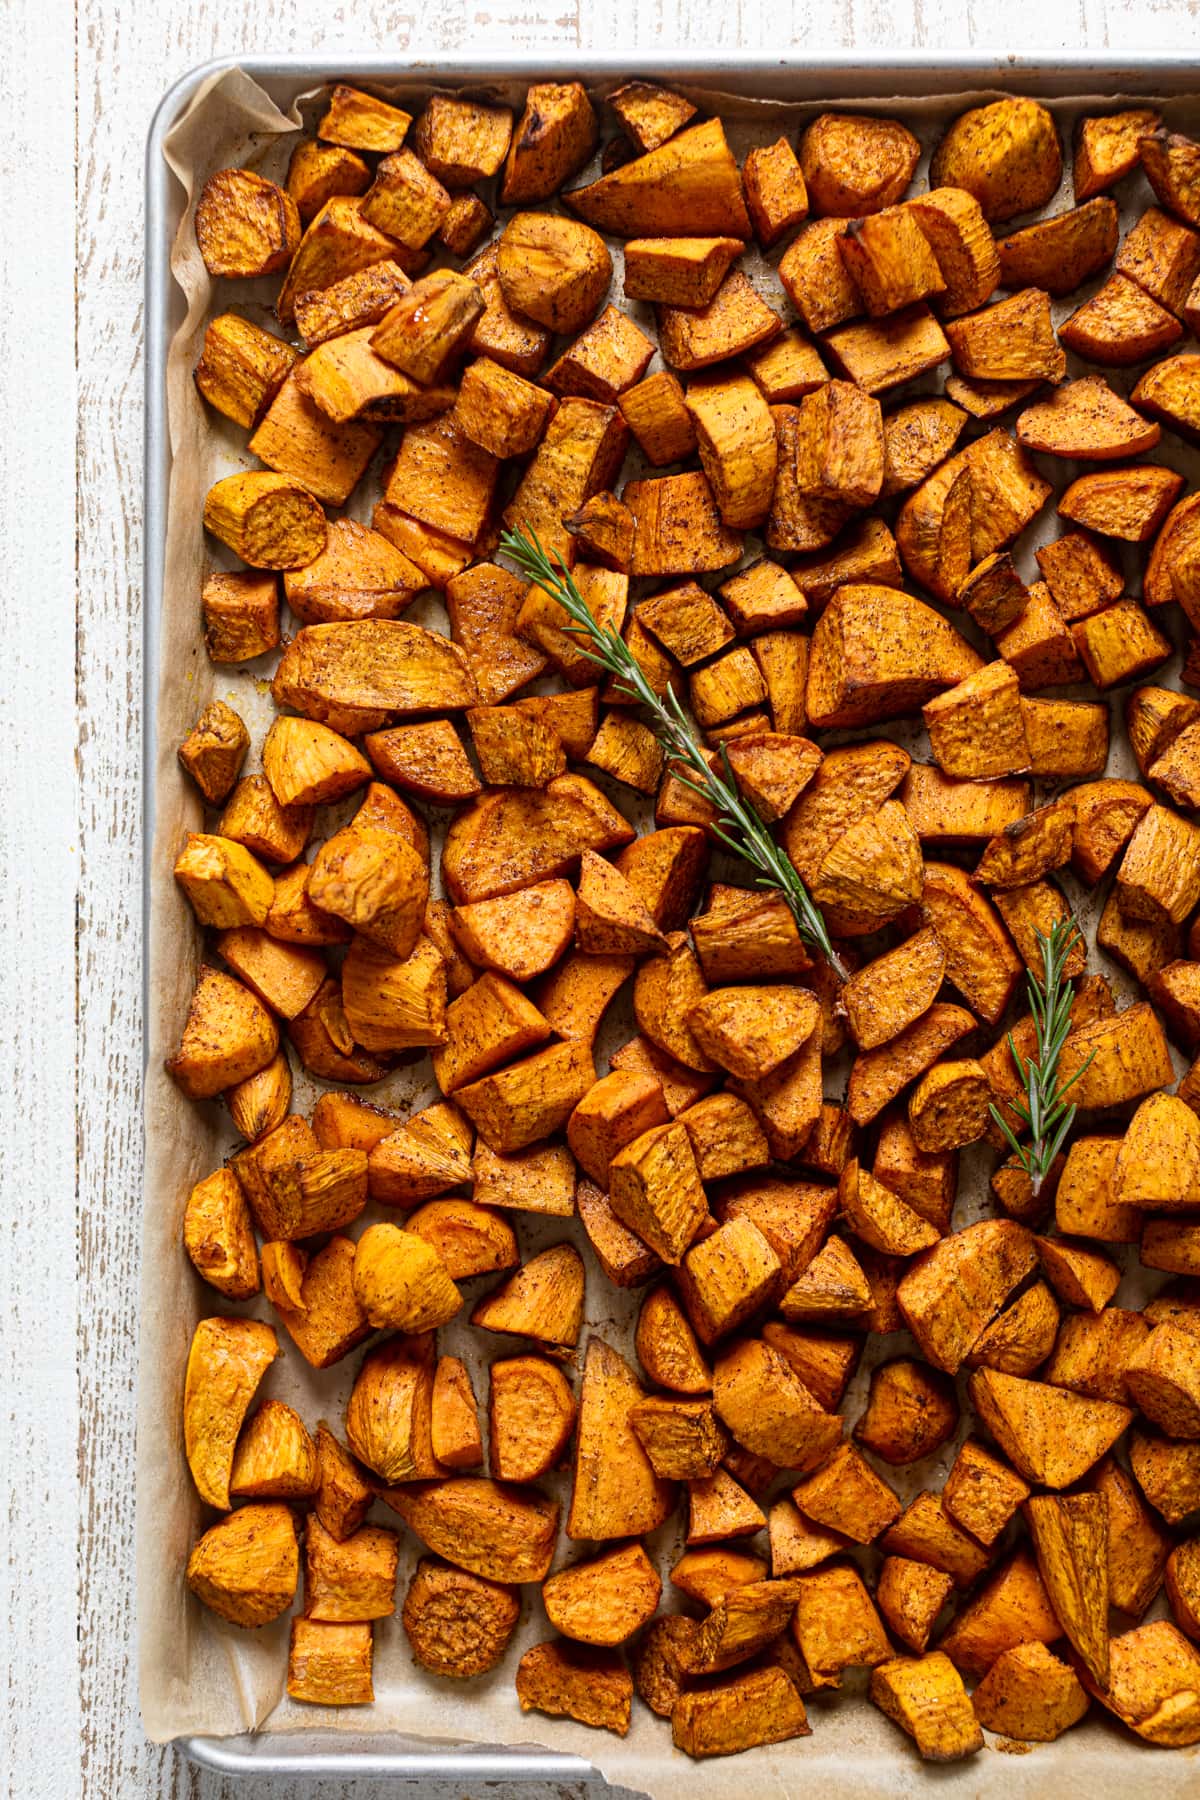 Roasted Sweet Potato chunks on a baking sheet